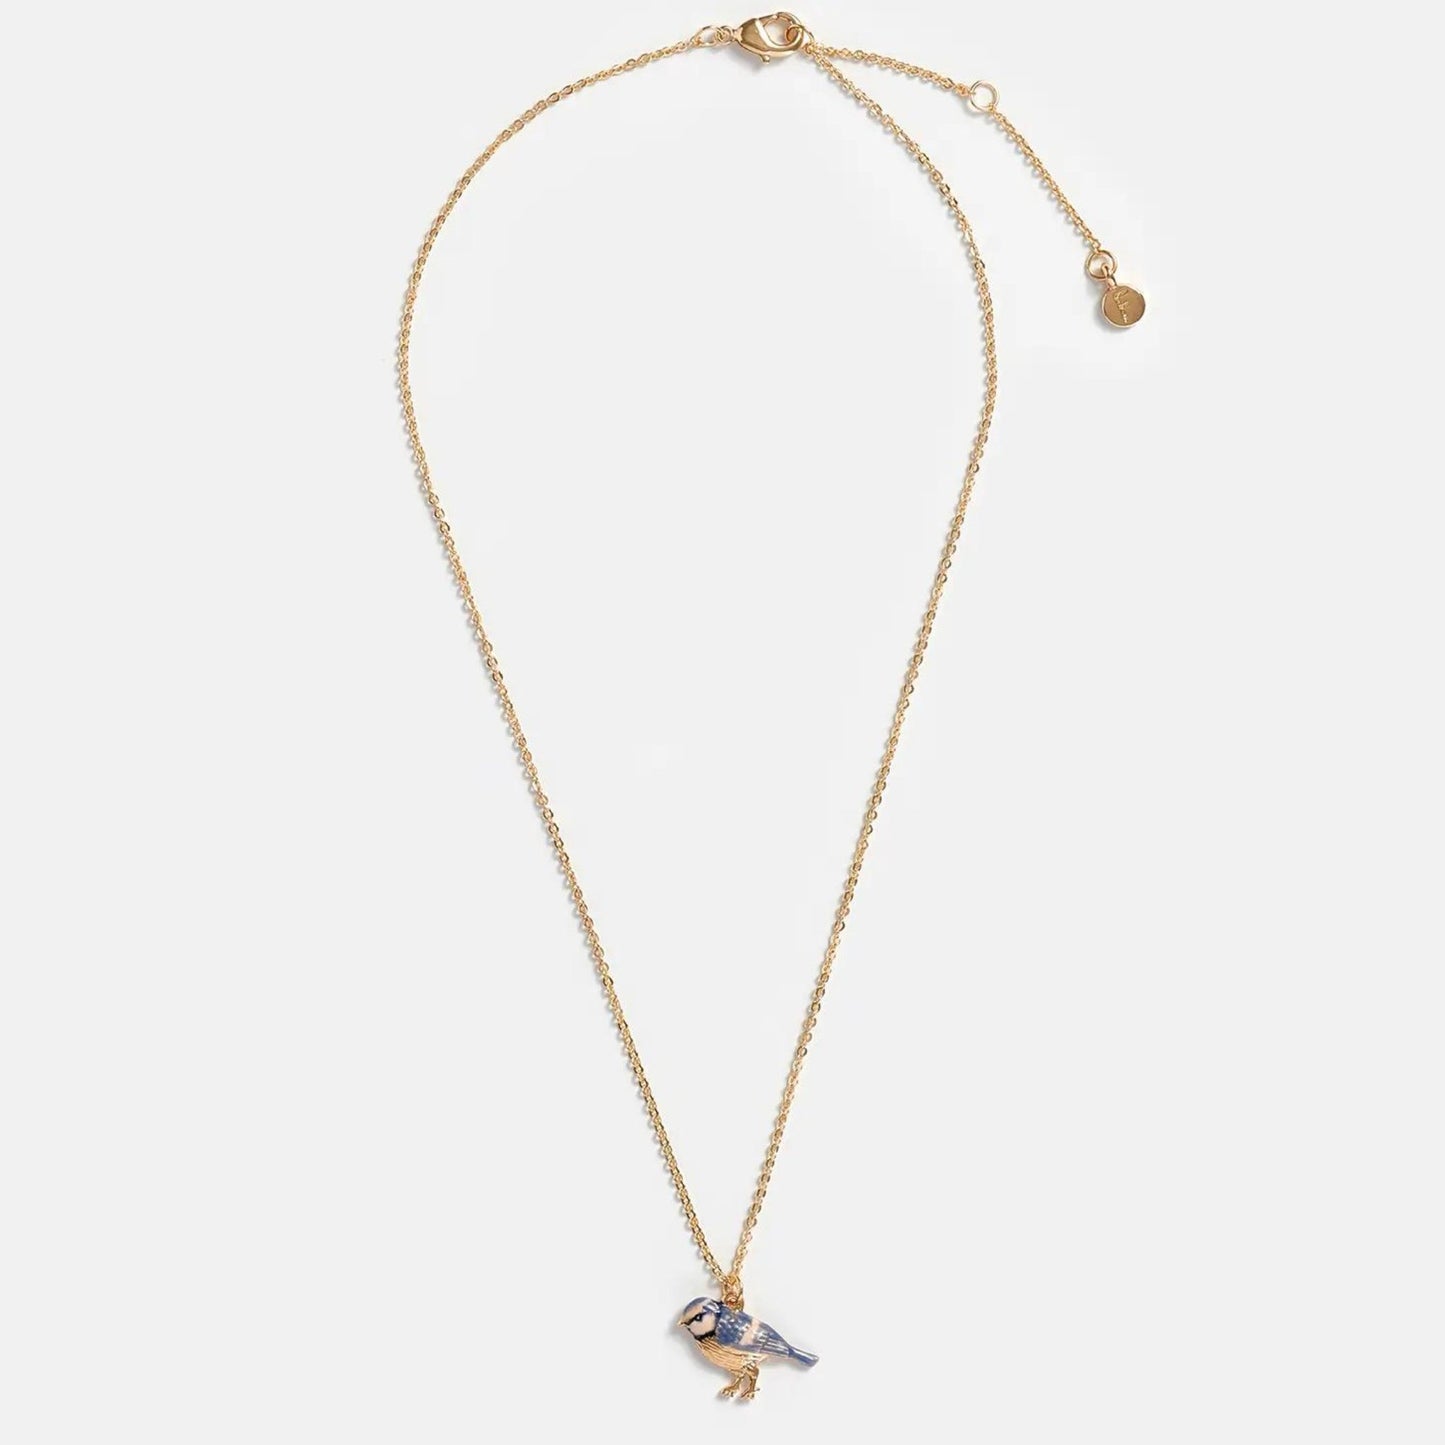 Enamel Blue Tit Necklace - The Little Jewellery Company